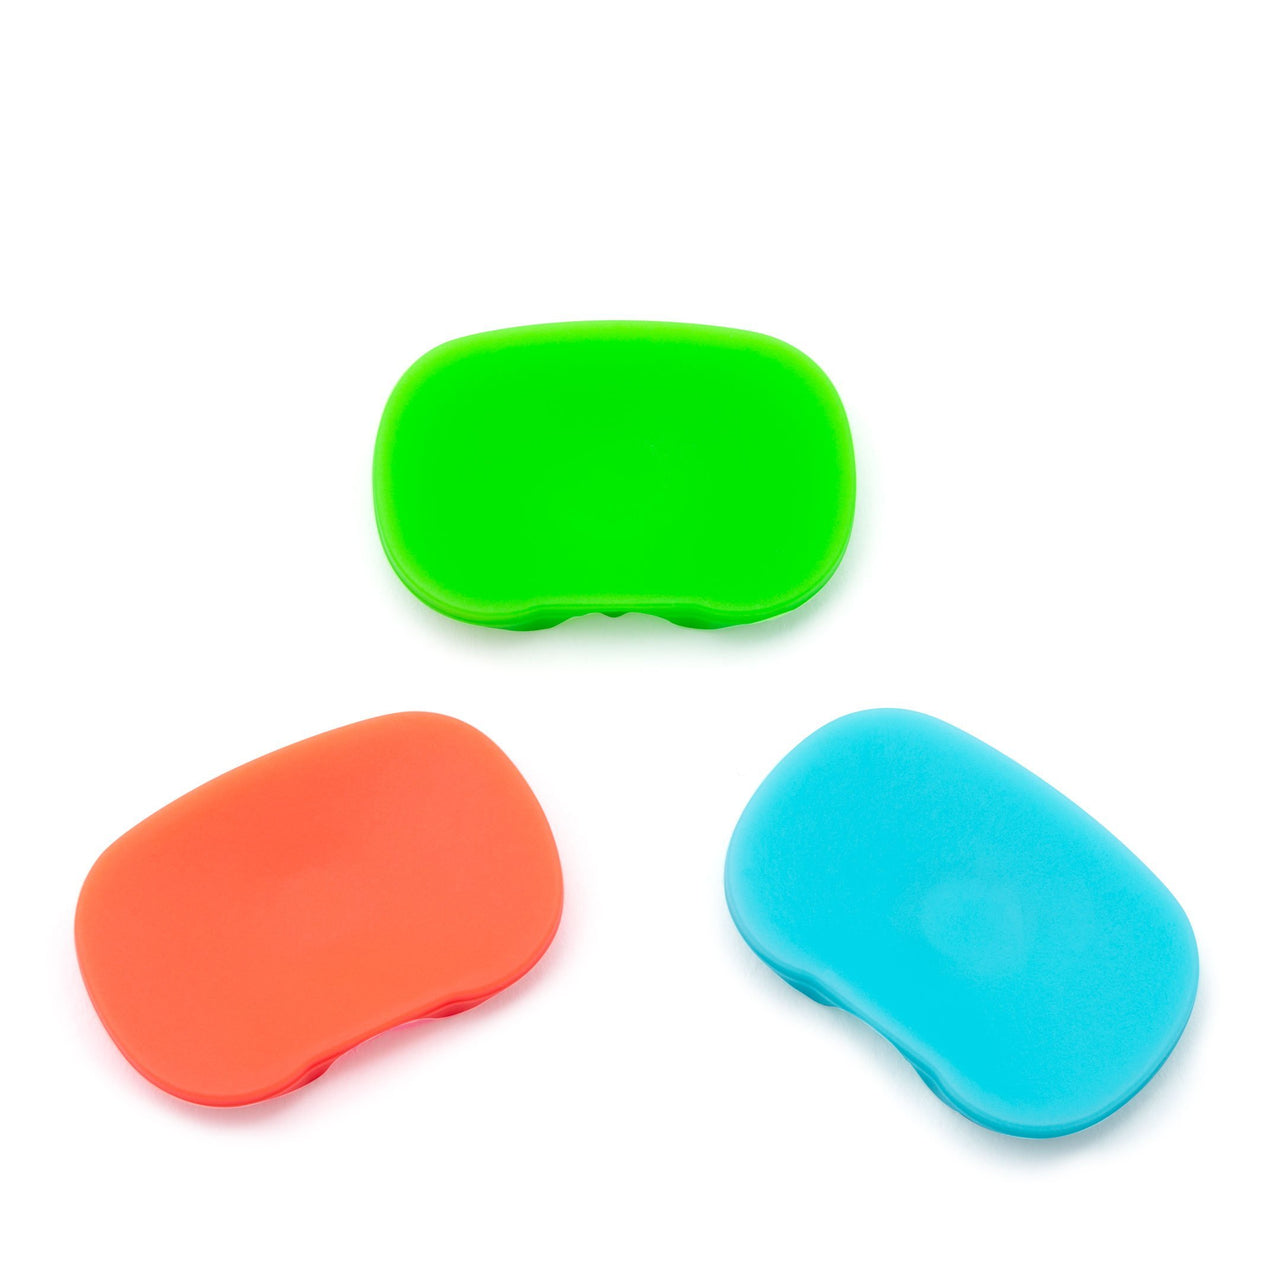 PAX 2/3 Flat Mouthpiece Multi-Color 3-Pack